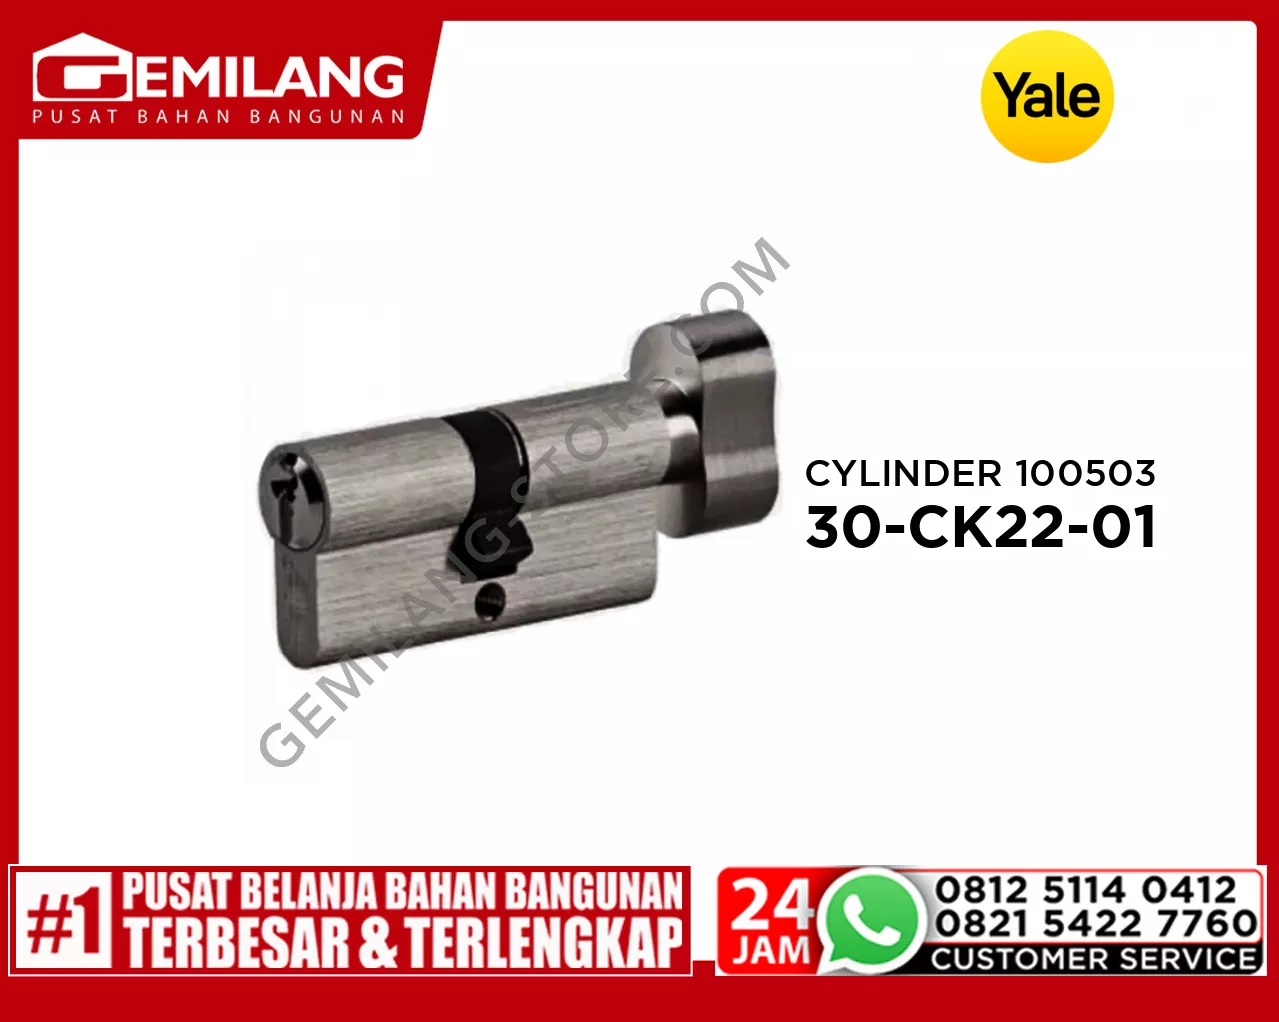 YALE CYLINDER 10-0503-3030-CK22-01